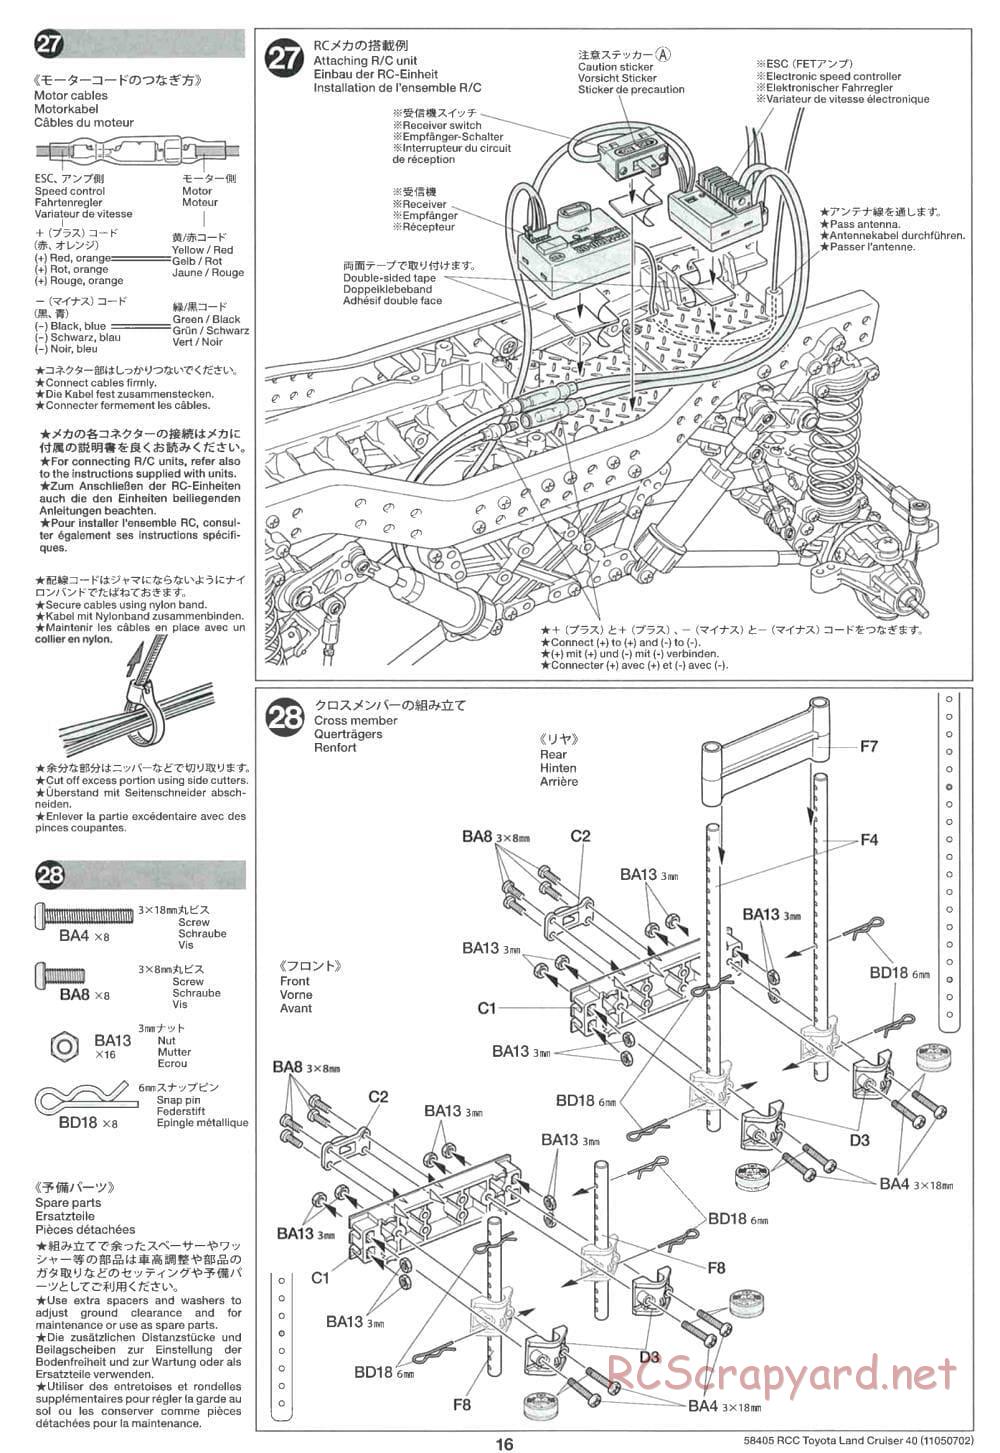 Tamiya - Toyota Land Cruiser 40 - CR-01 Chassis - Manual - Page 16